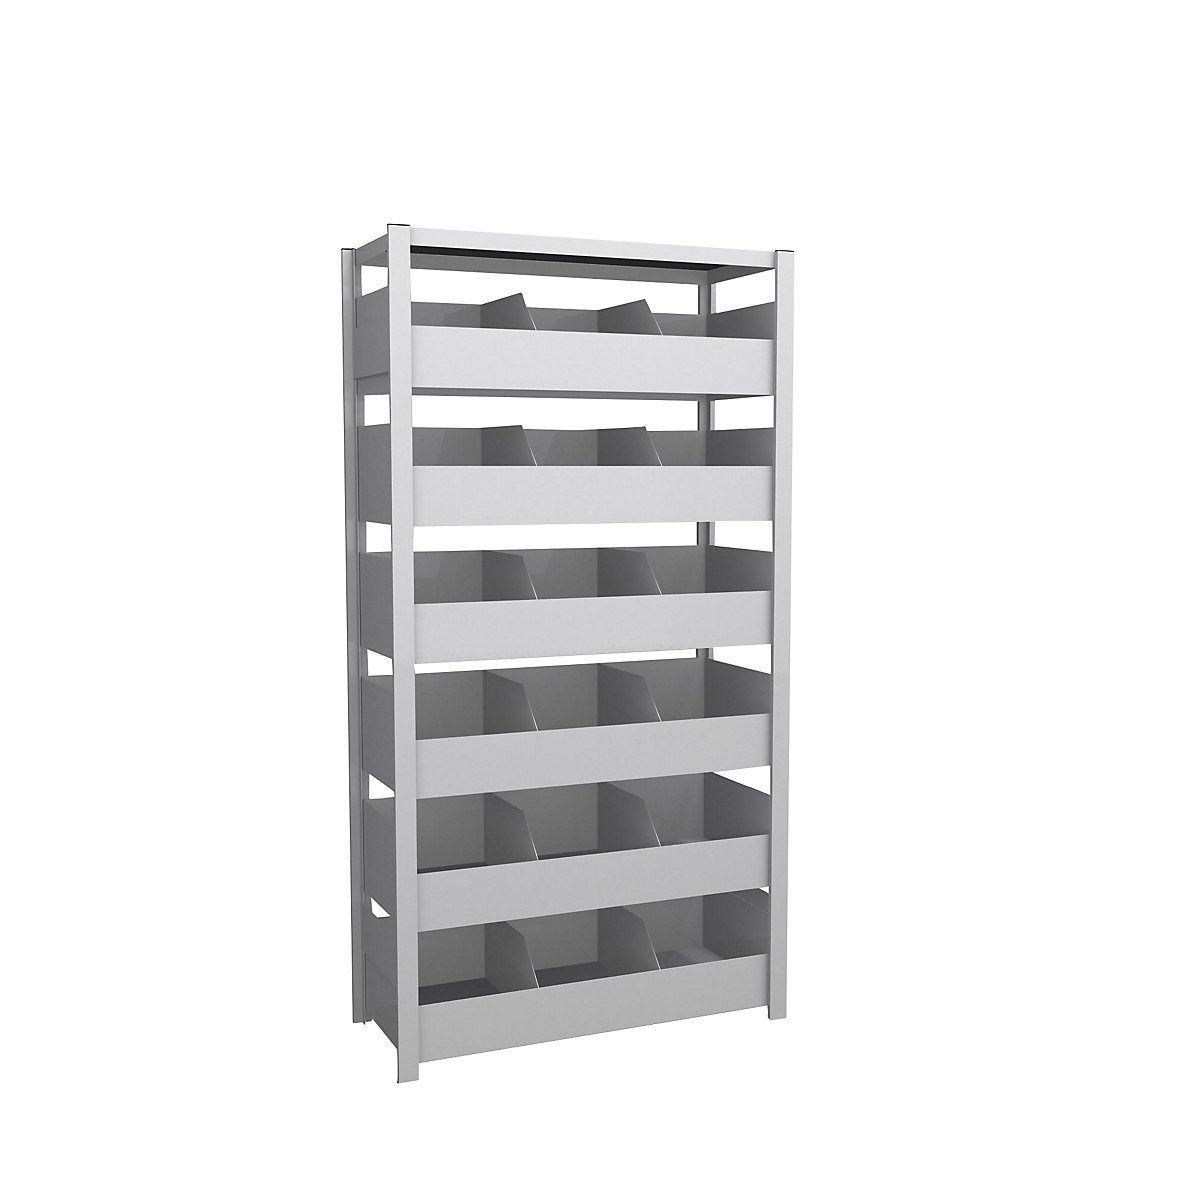 Bulk material shelving unit – hofe, shelf height 2000 mm, standard shelf unit, WxD 1060 x 435 mm-4